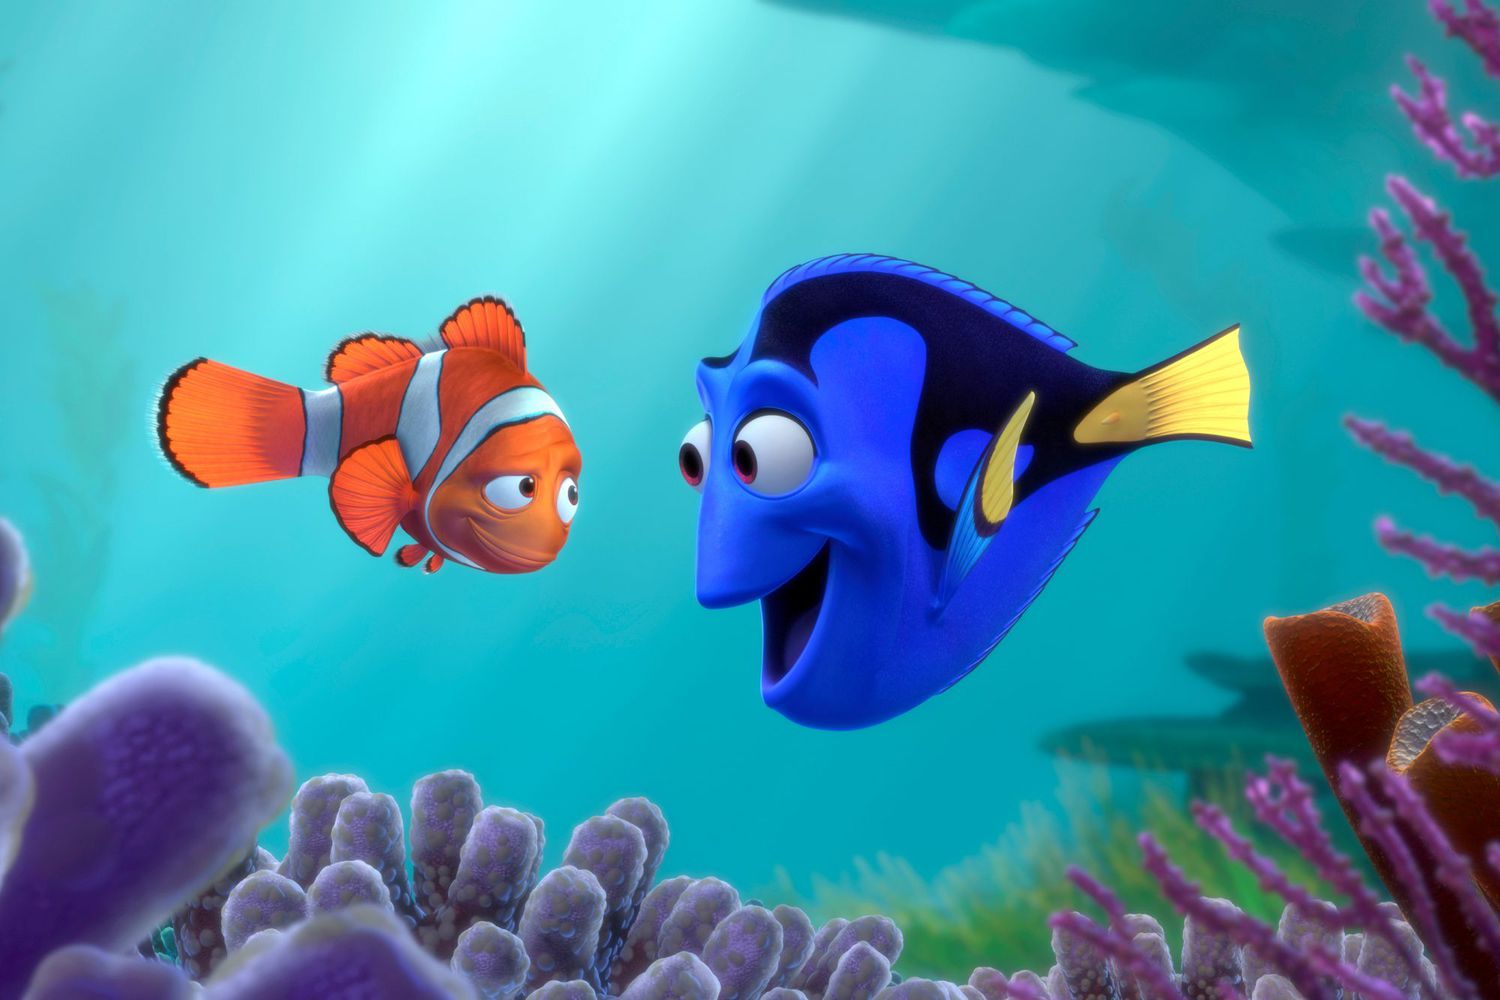 3. Finding Nemo (2003)